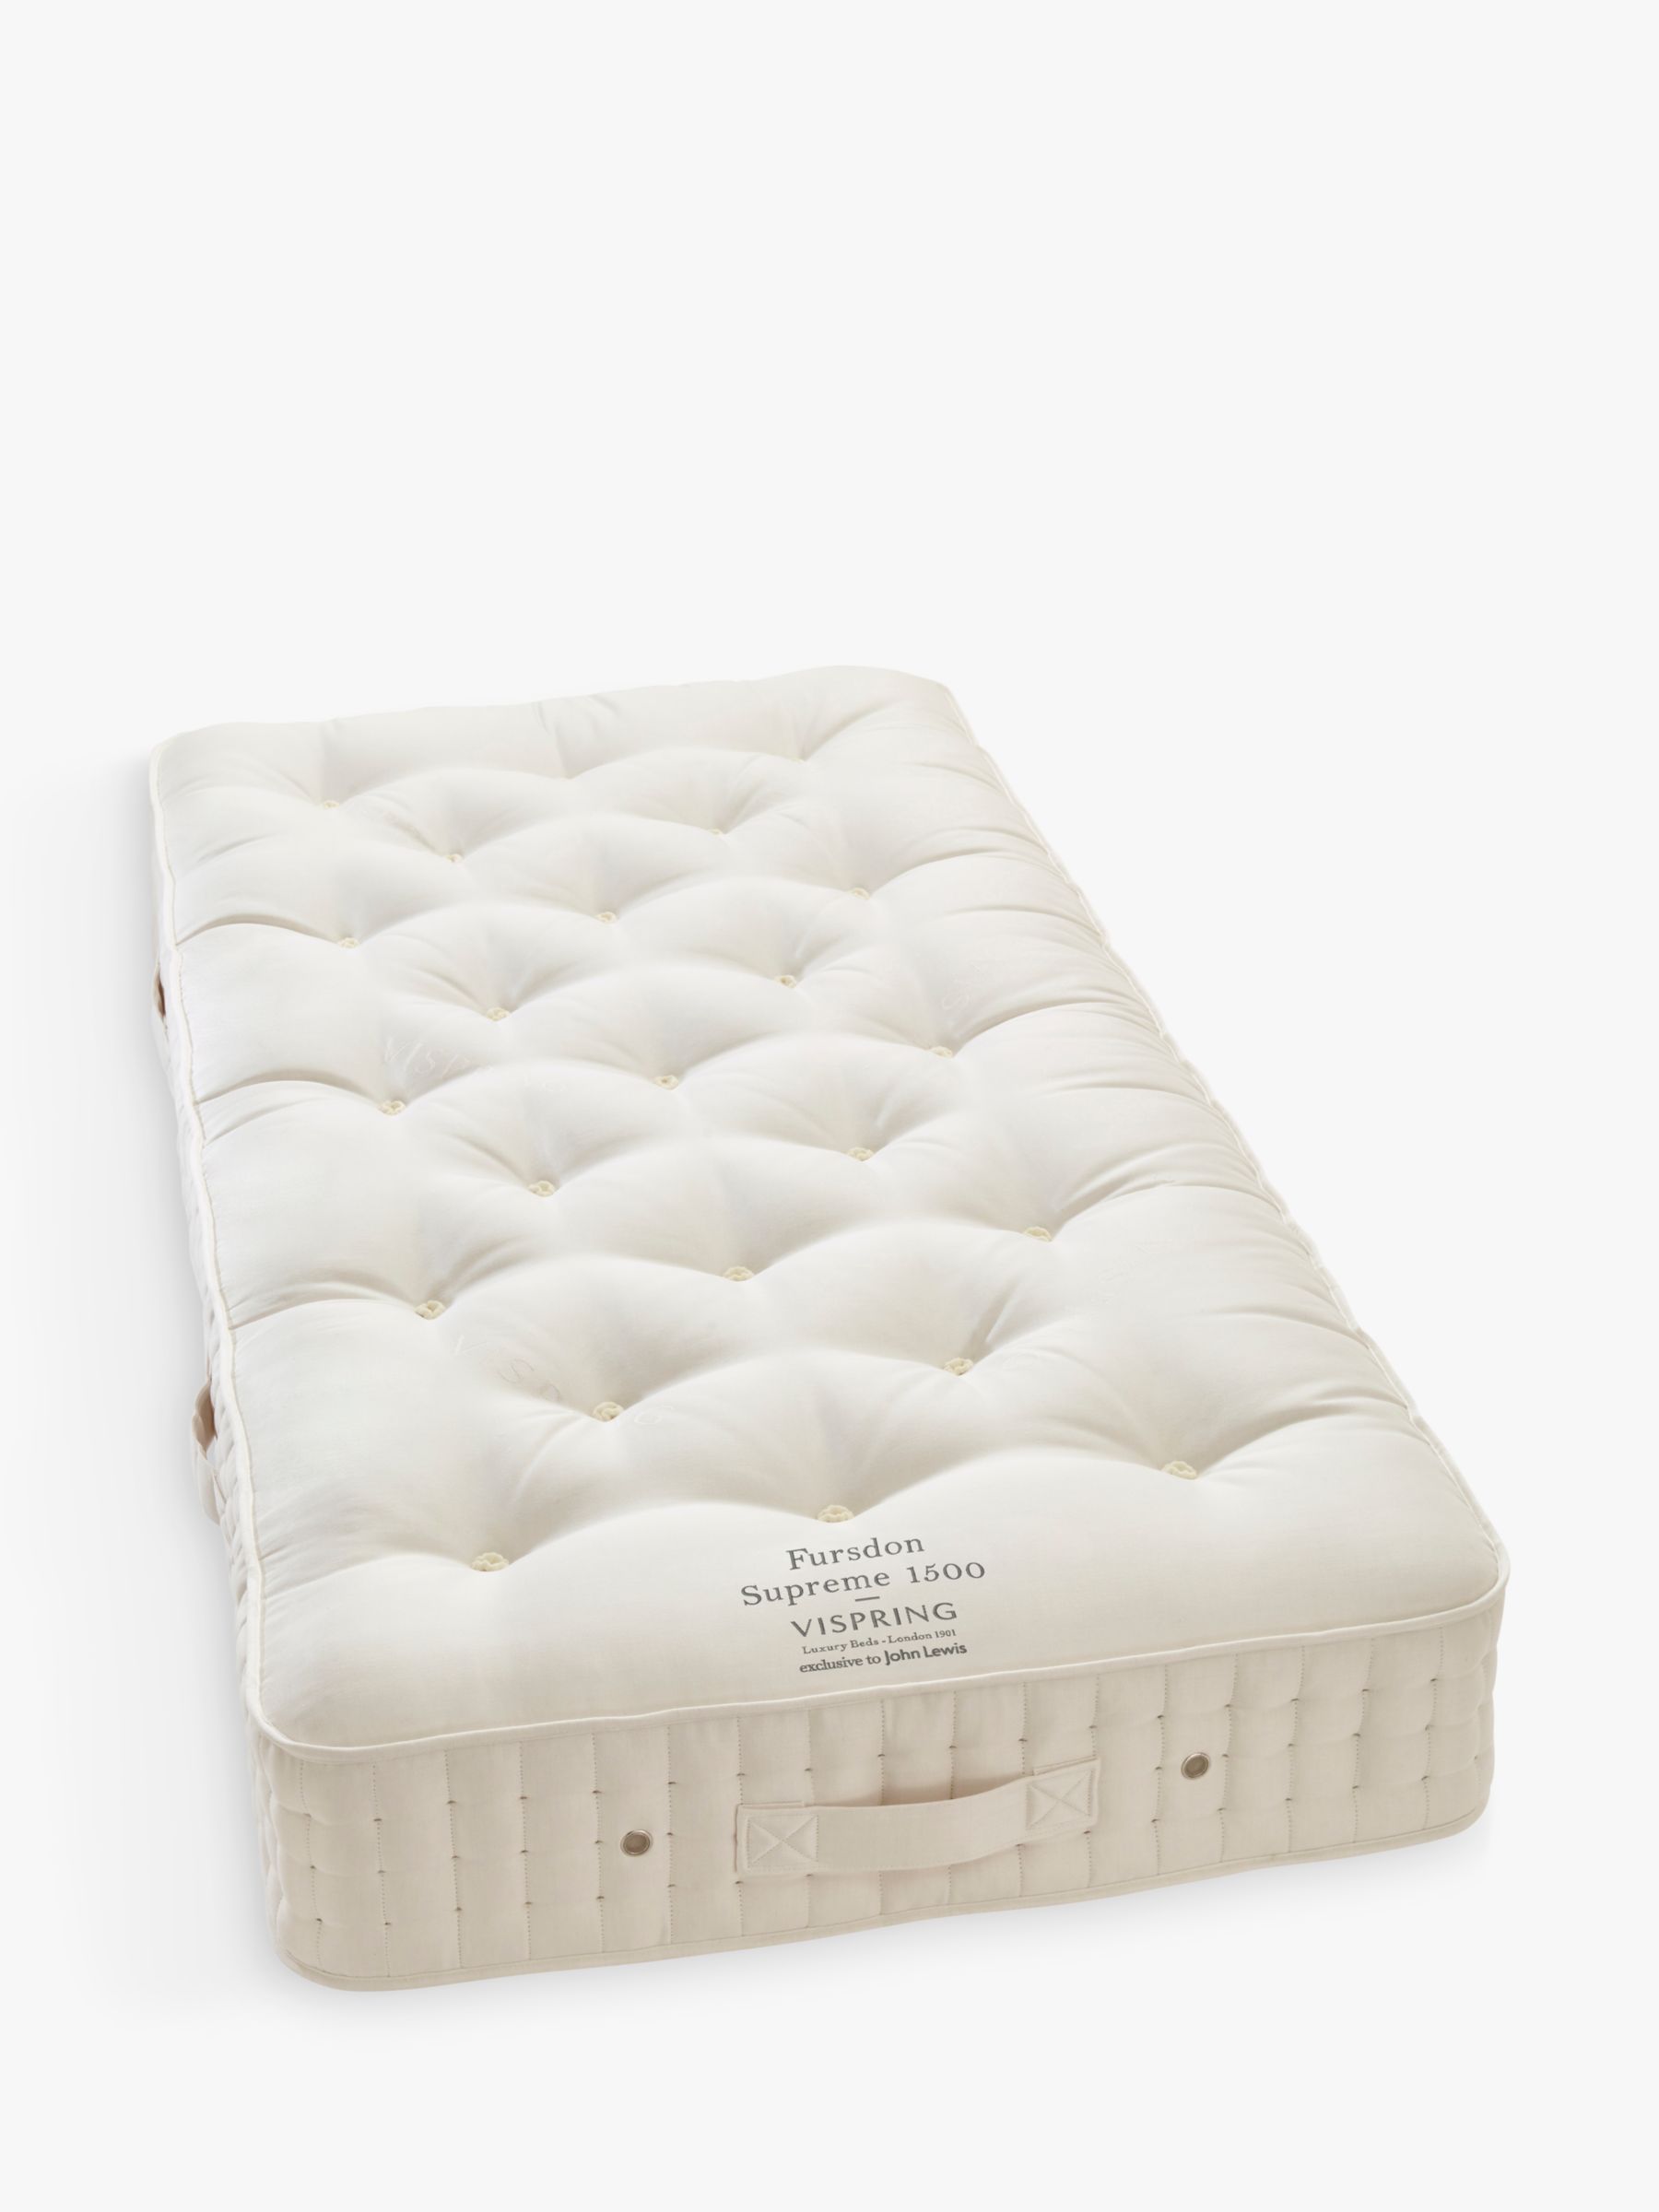 Photo of Vispring fursdon supreme 1500 pocket spring mattress medium tension single